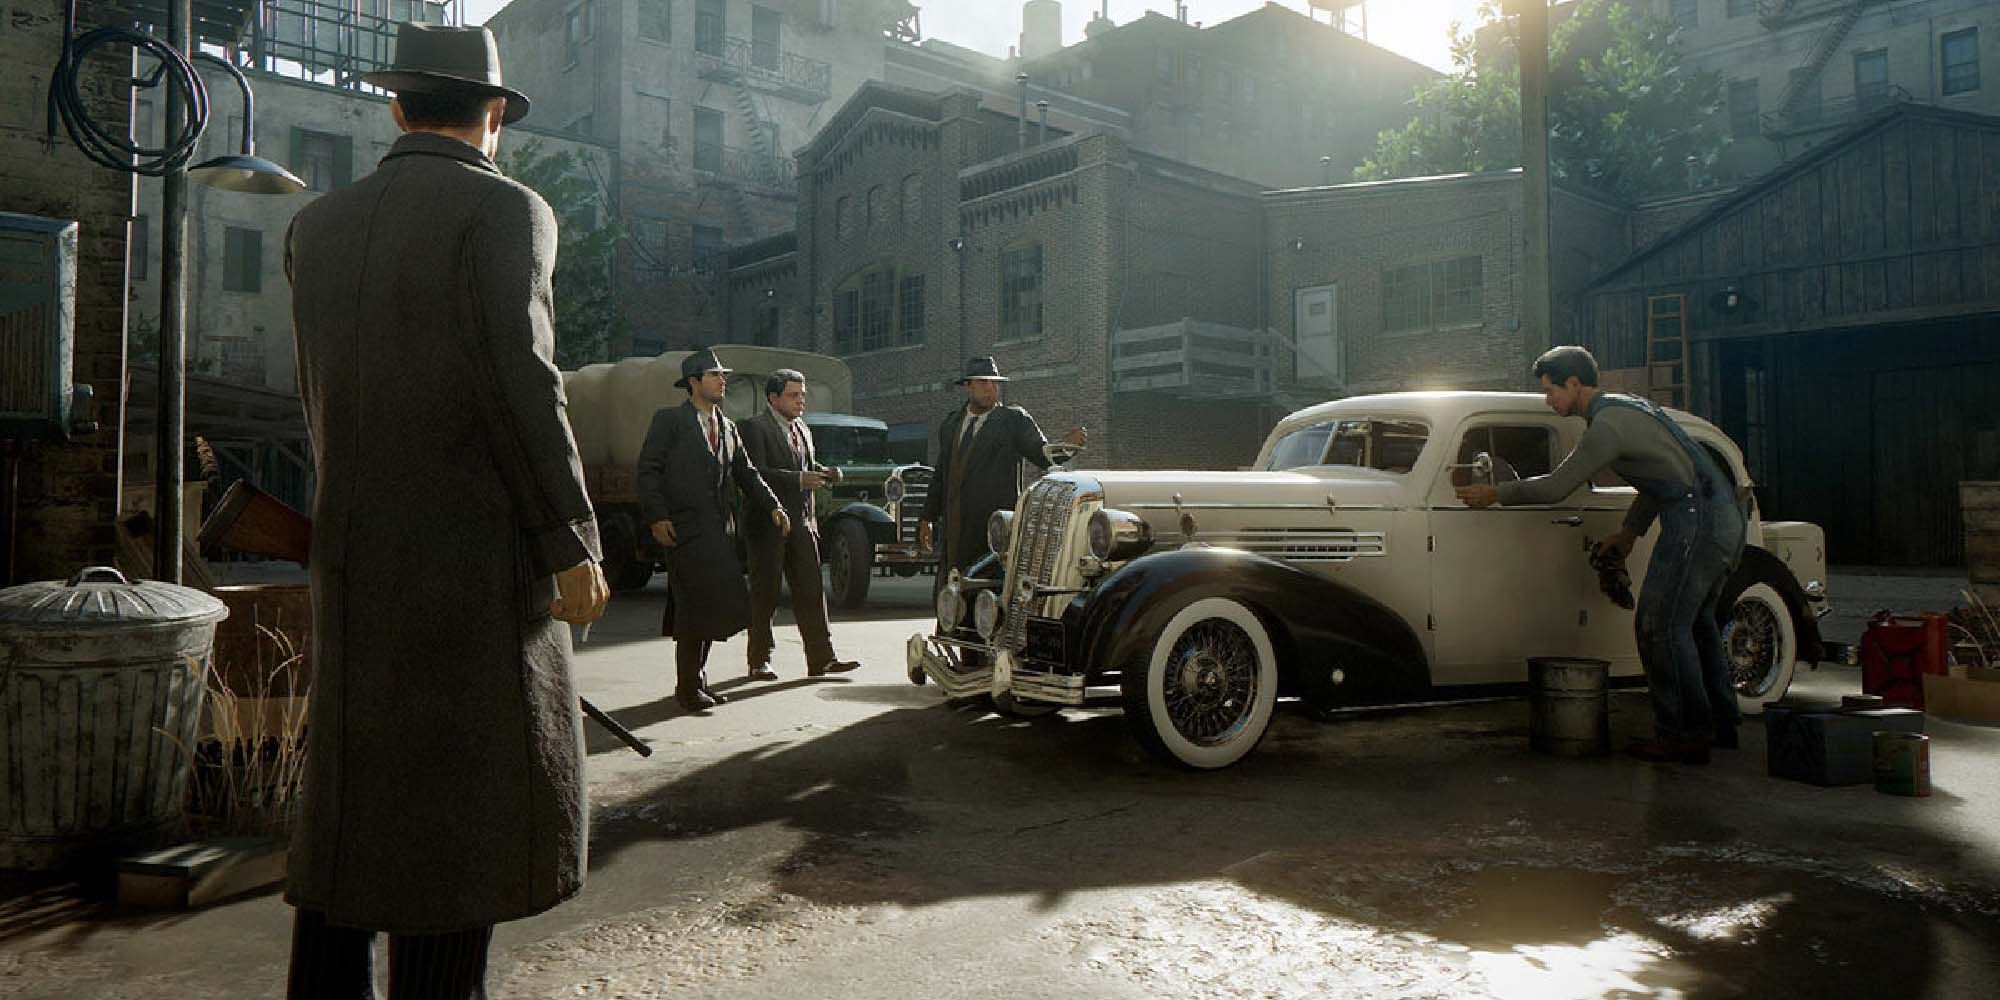 Mafia screenshot of characters by a car